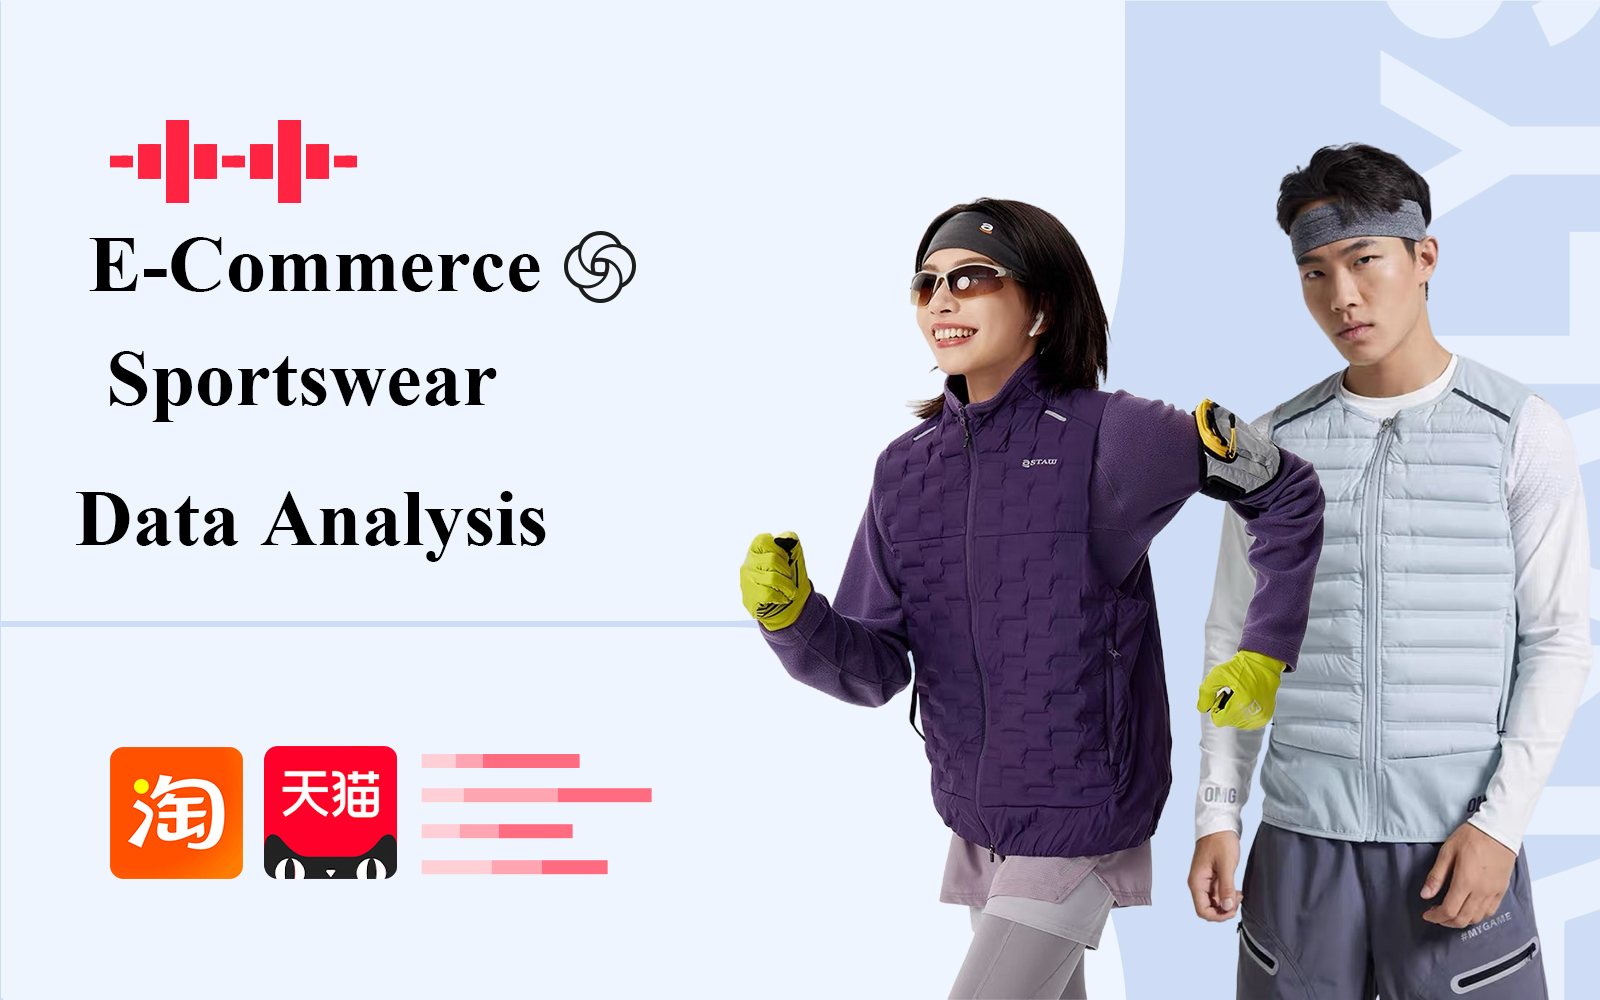 The Data Analysis of Sportswear E-Commerce